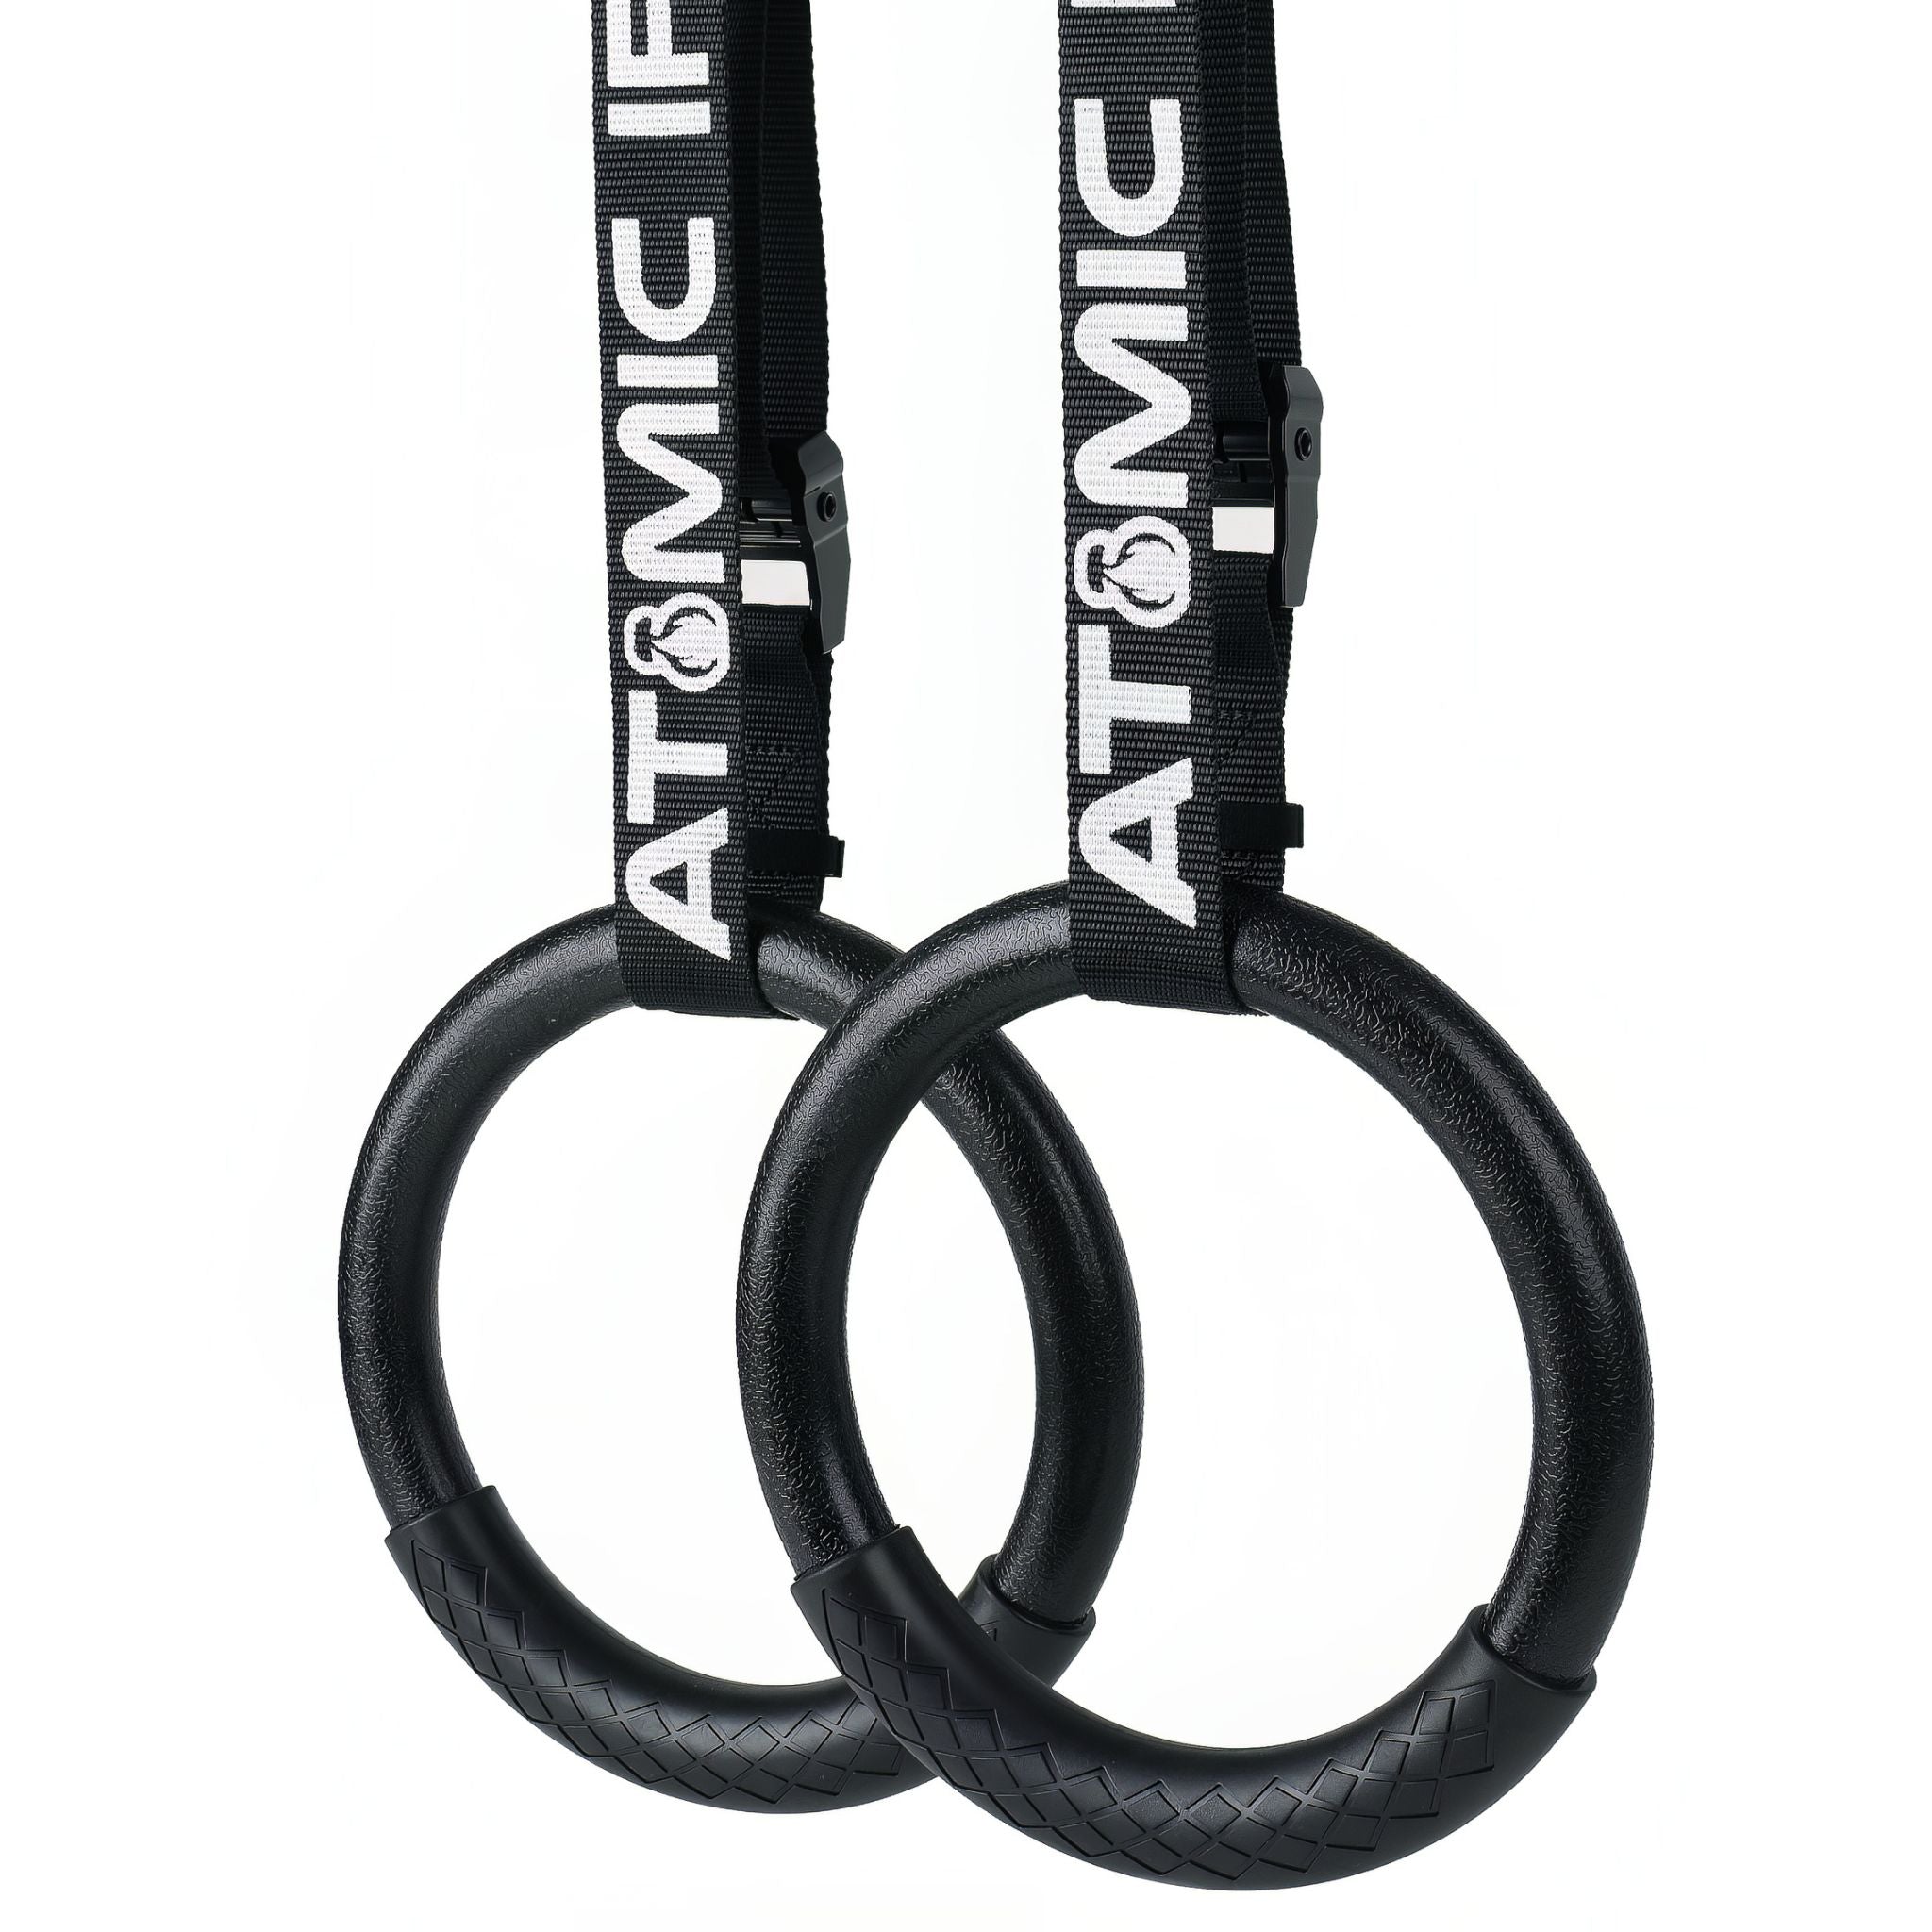 Atomic iron premium outdoor gymnastic rings set with black adjustable straps